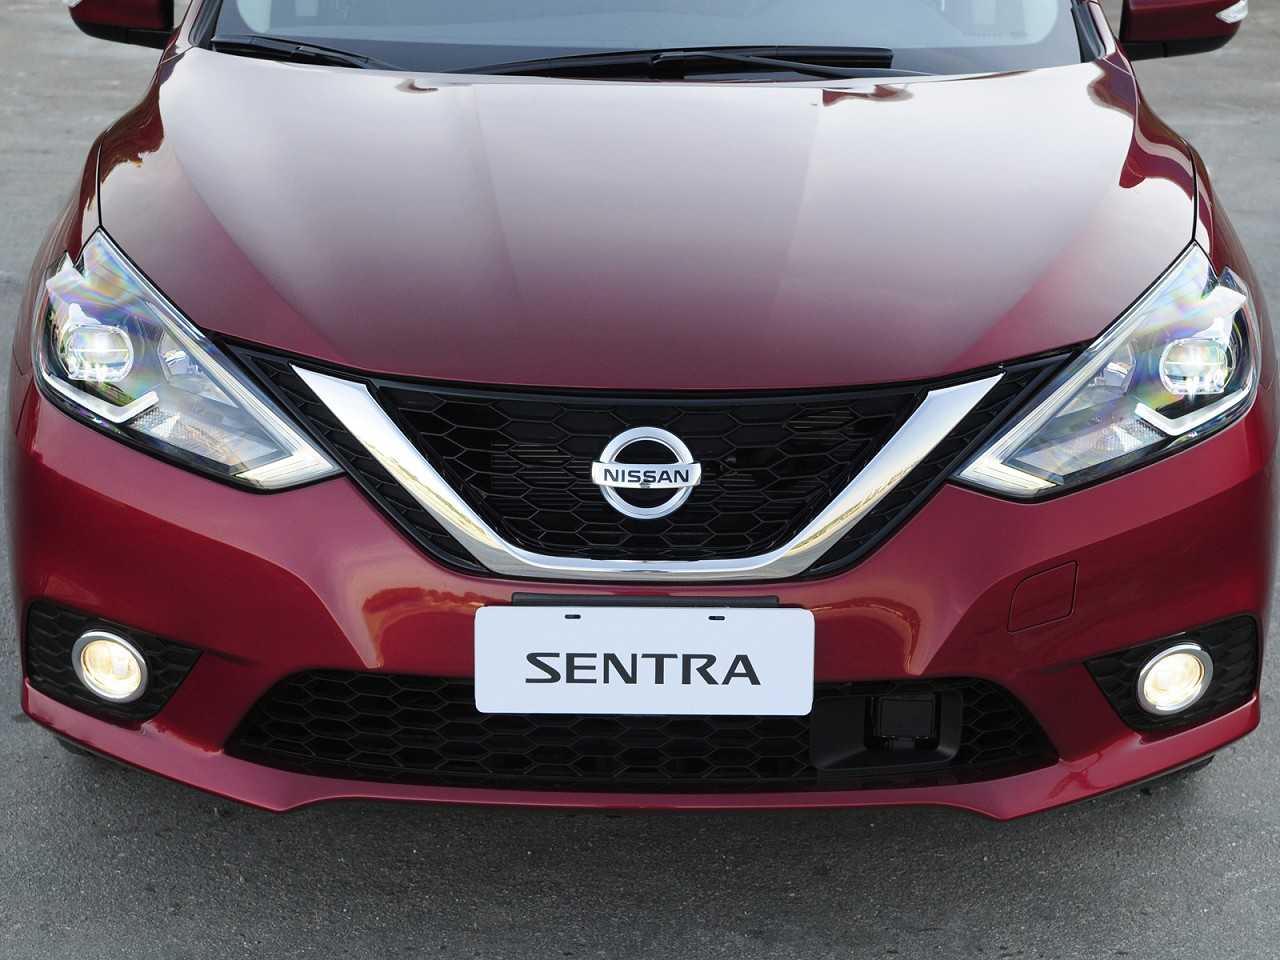 NissanSentra 2017 - outros